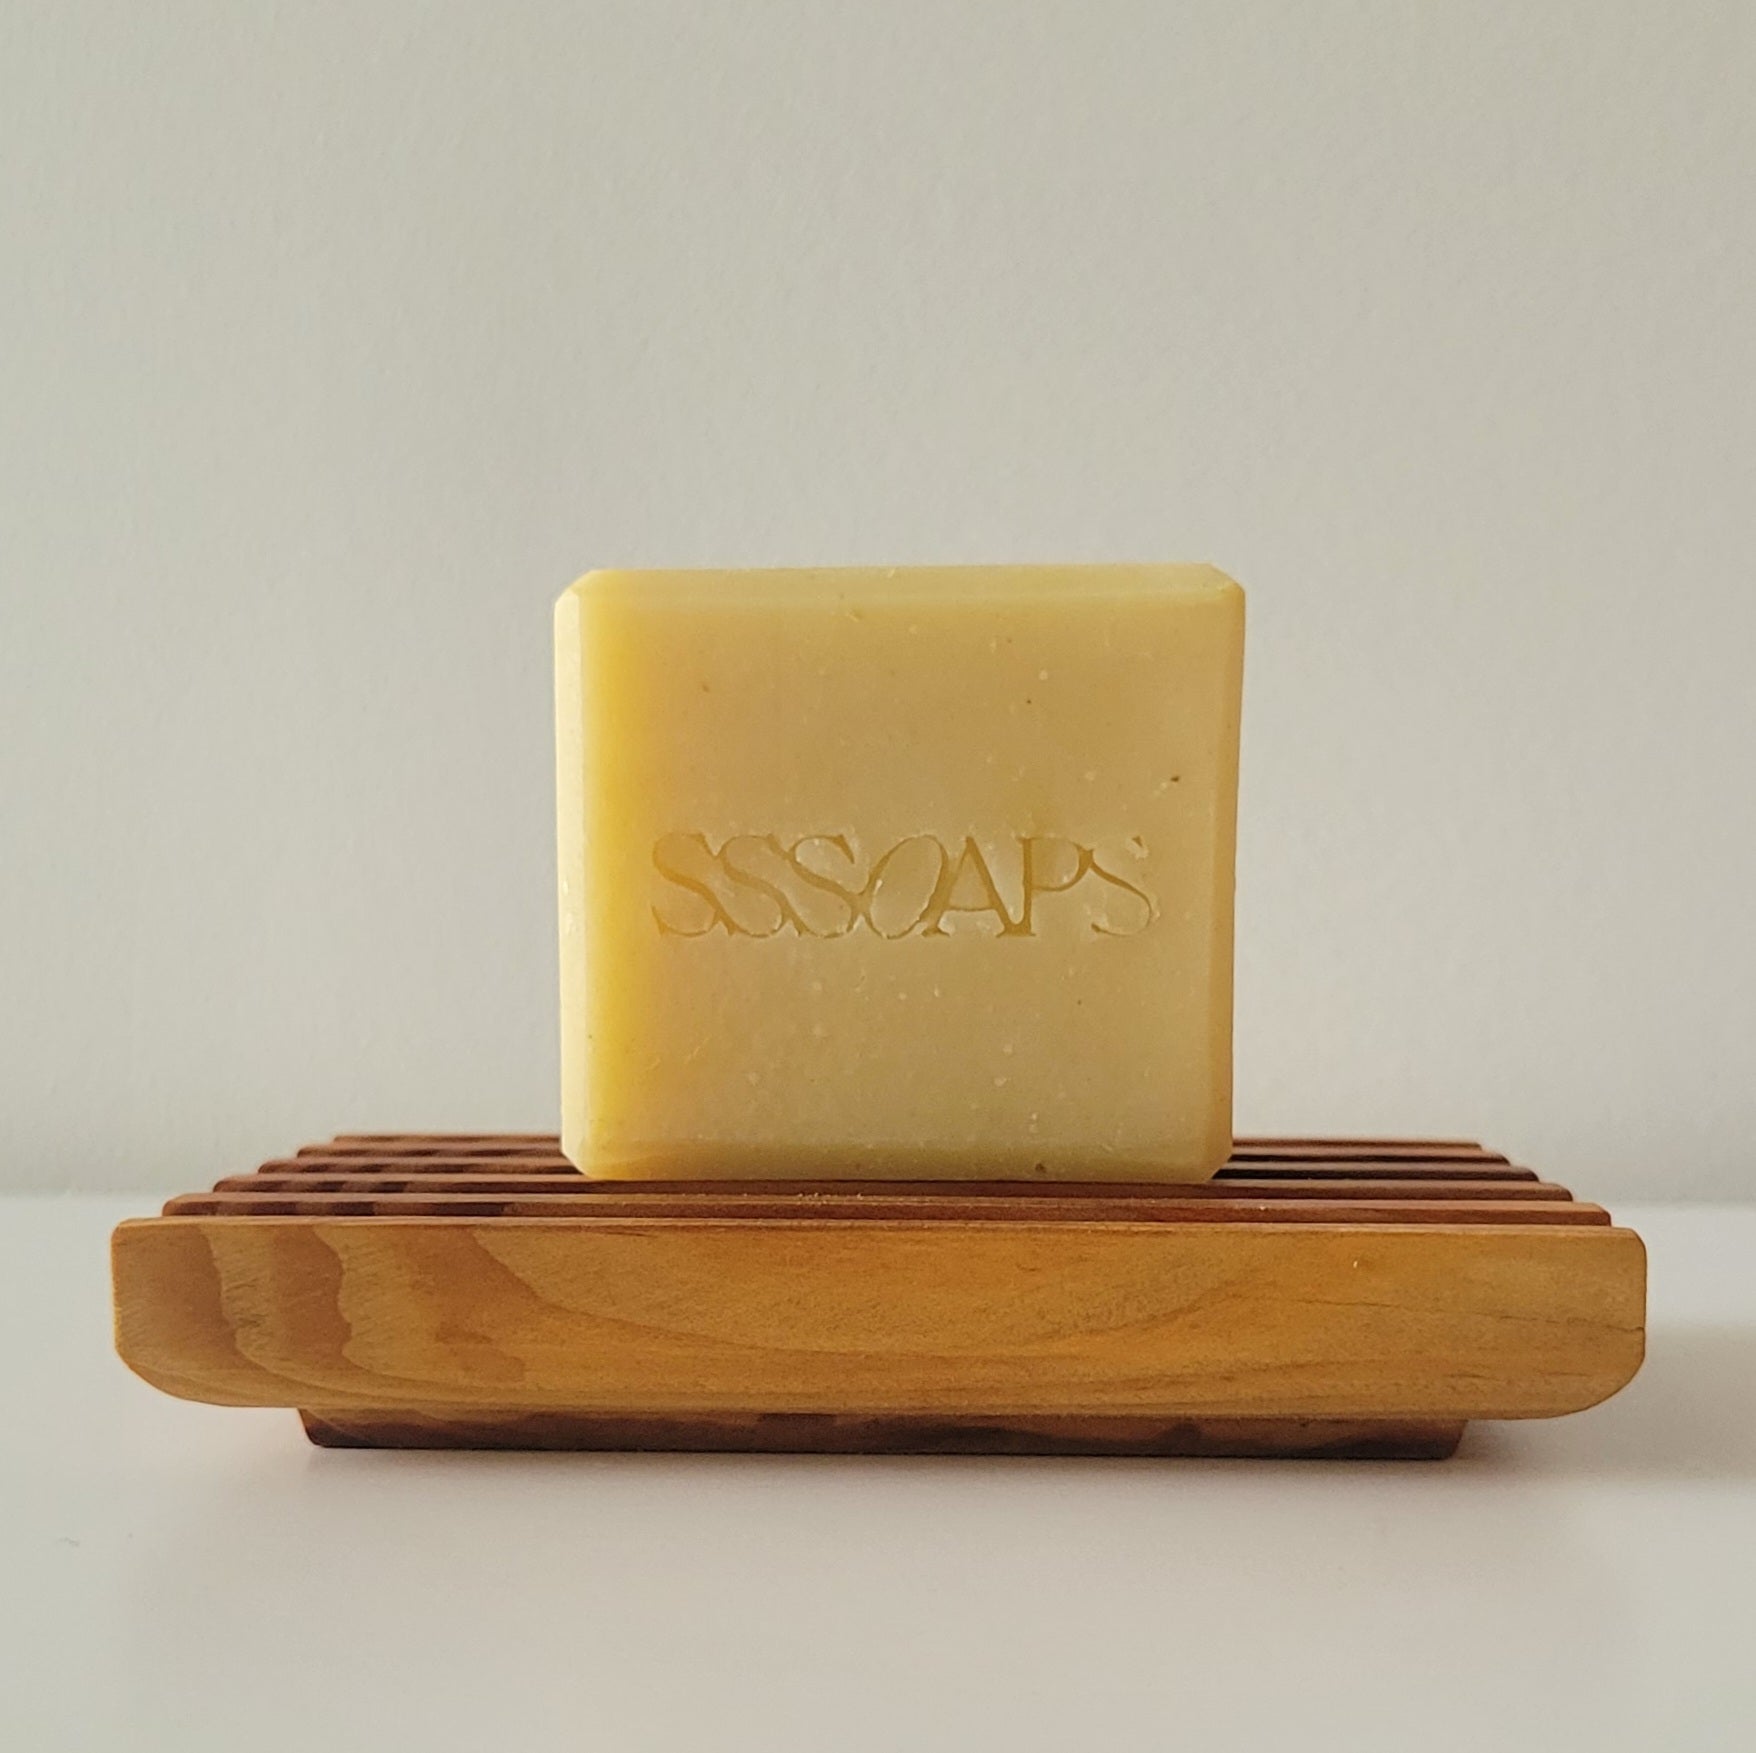 SSSOAPS - Batch 40 Soap